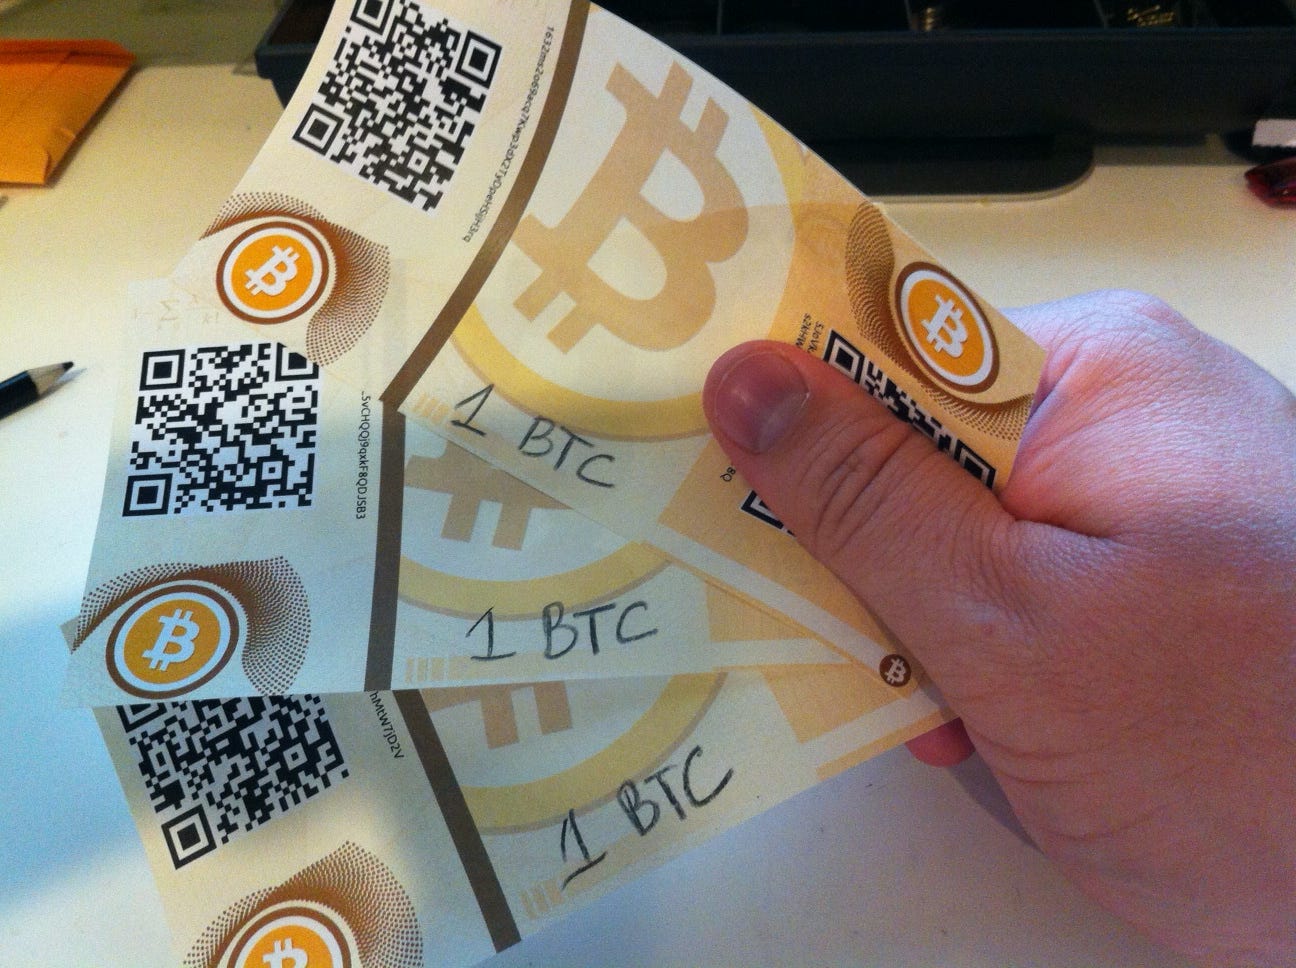 Paper wallet - Bitcoin Wiki